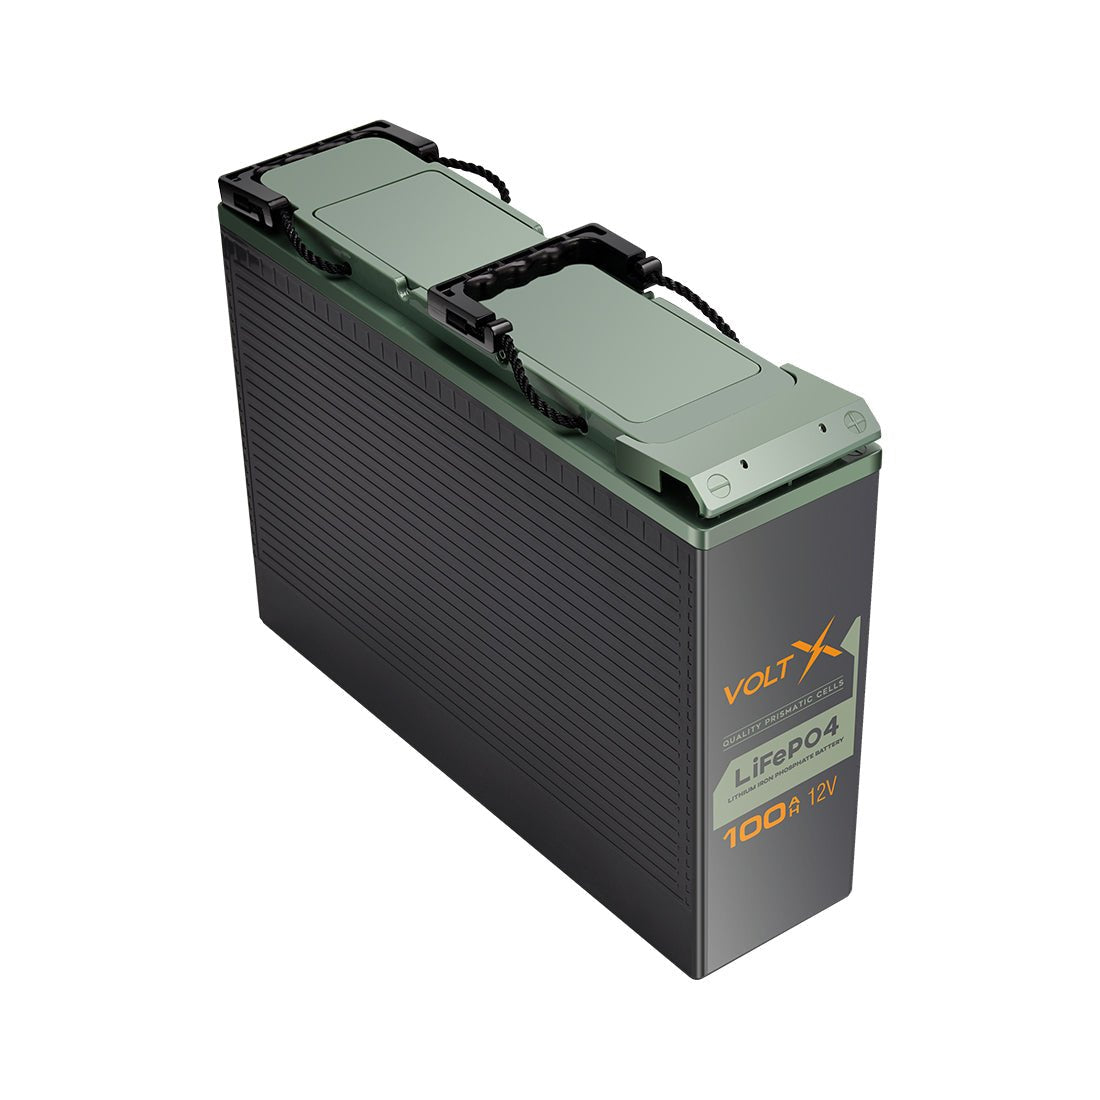 VoltX 12V Lithium Battery 100Ah Slim - Outdoorium